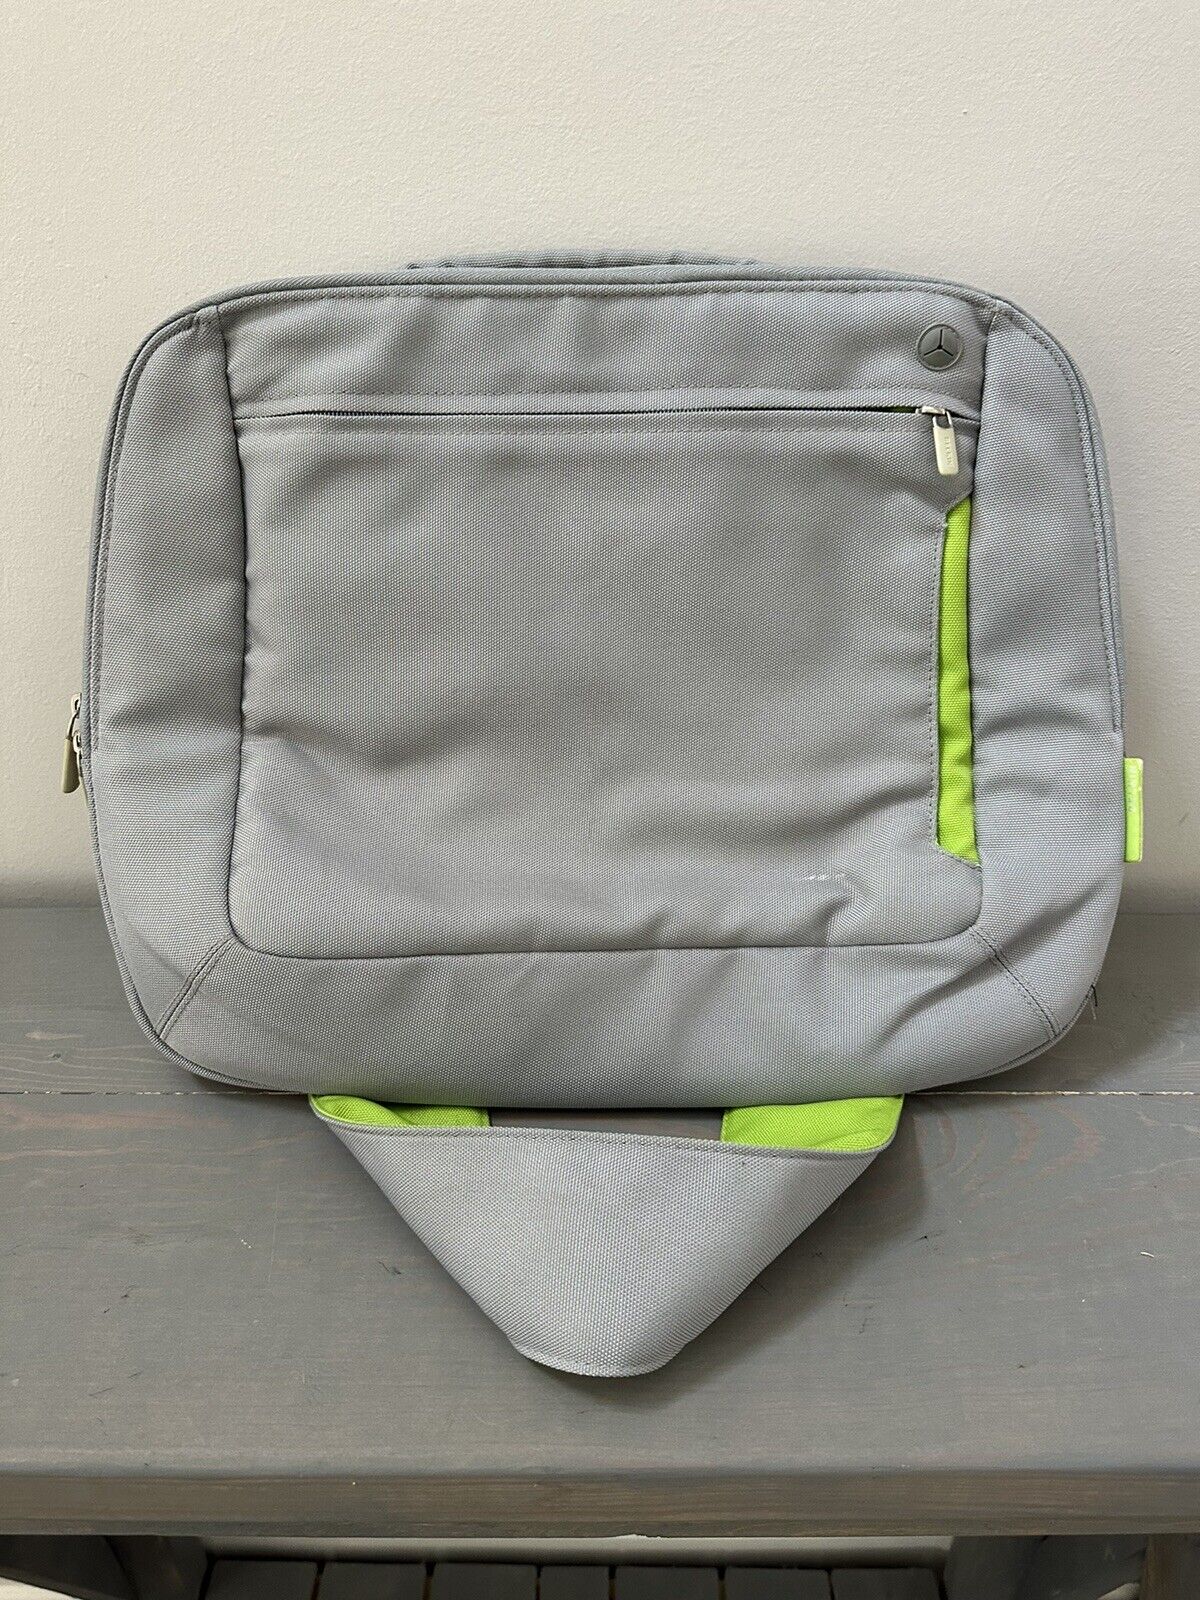 Belkin 15” Laptop Bag Messenger Style Gray/Green Cross Body Or Shoulder